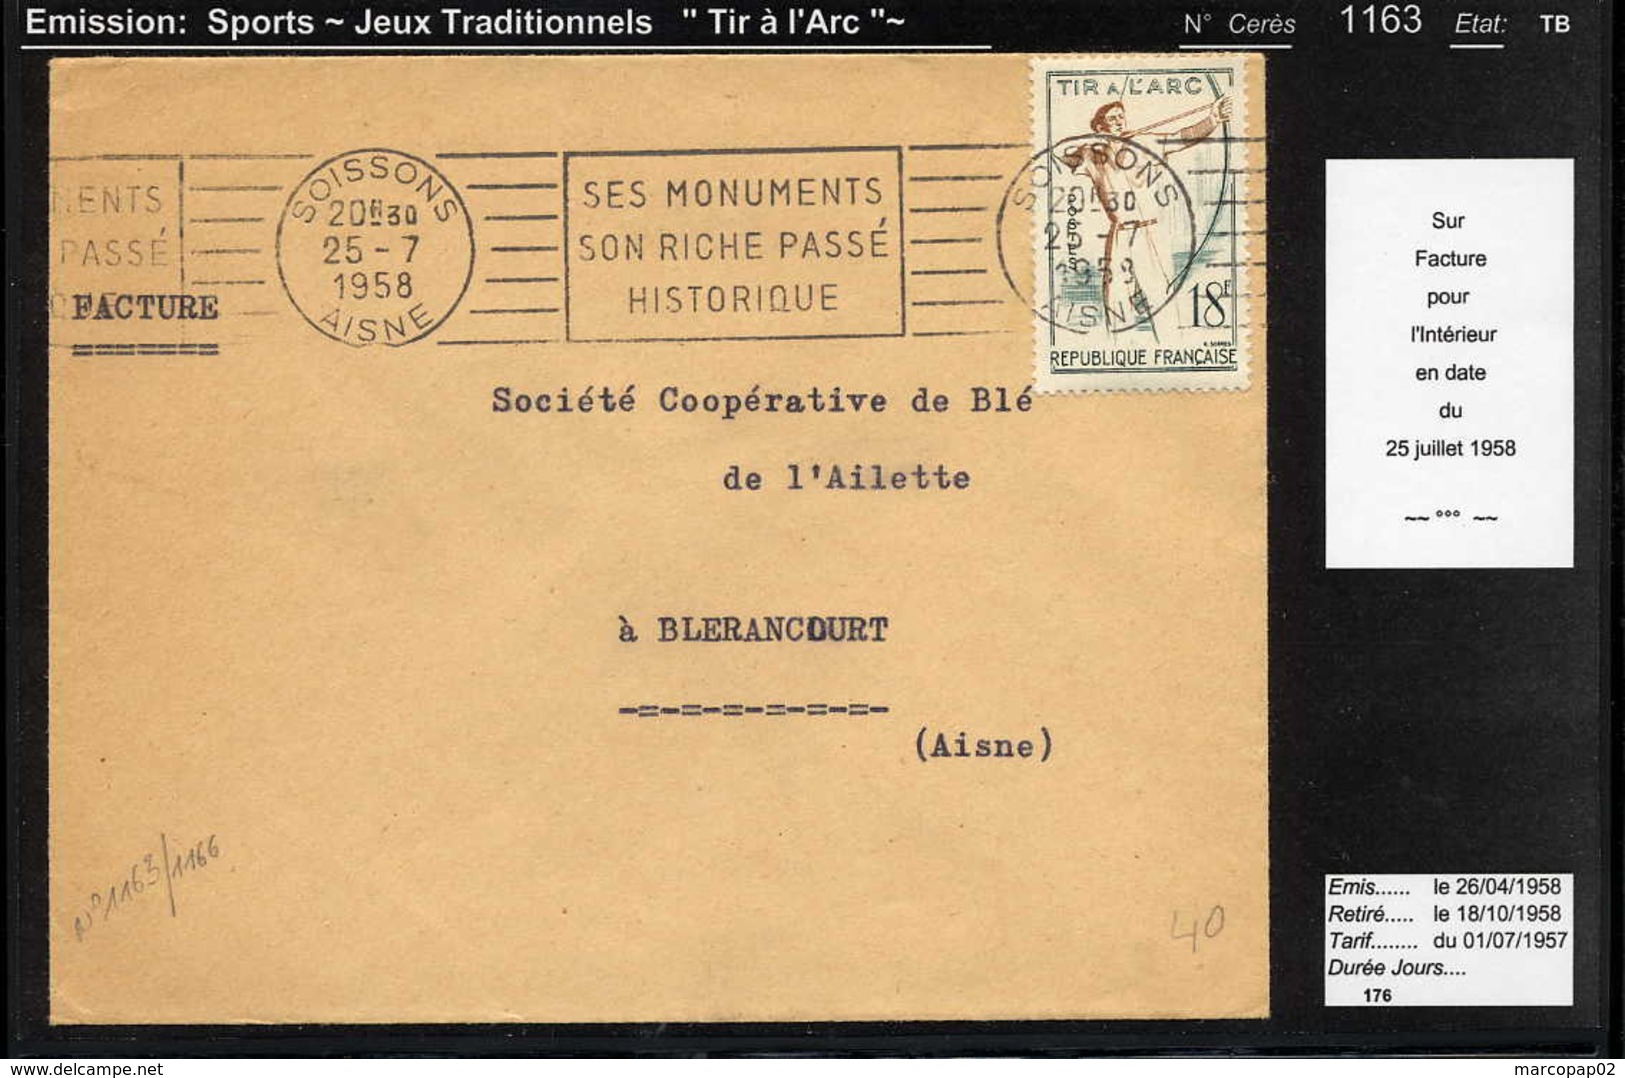 MAURY N° 1163: TIR A L'ARC - TRADITION -S/FACTURE DU 25/7/1958 - 1921-1960: Moderne